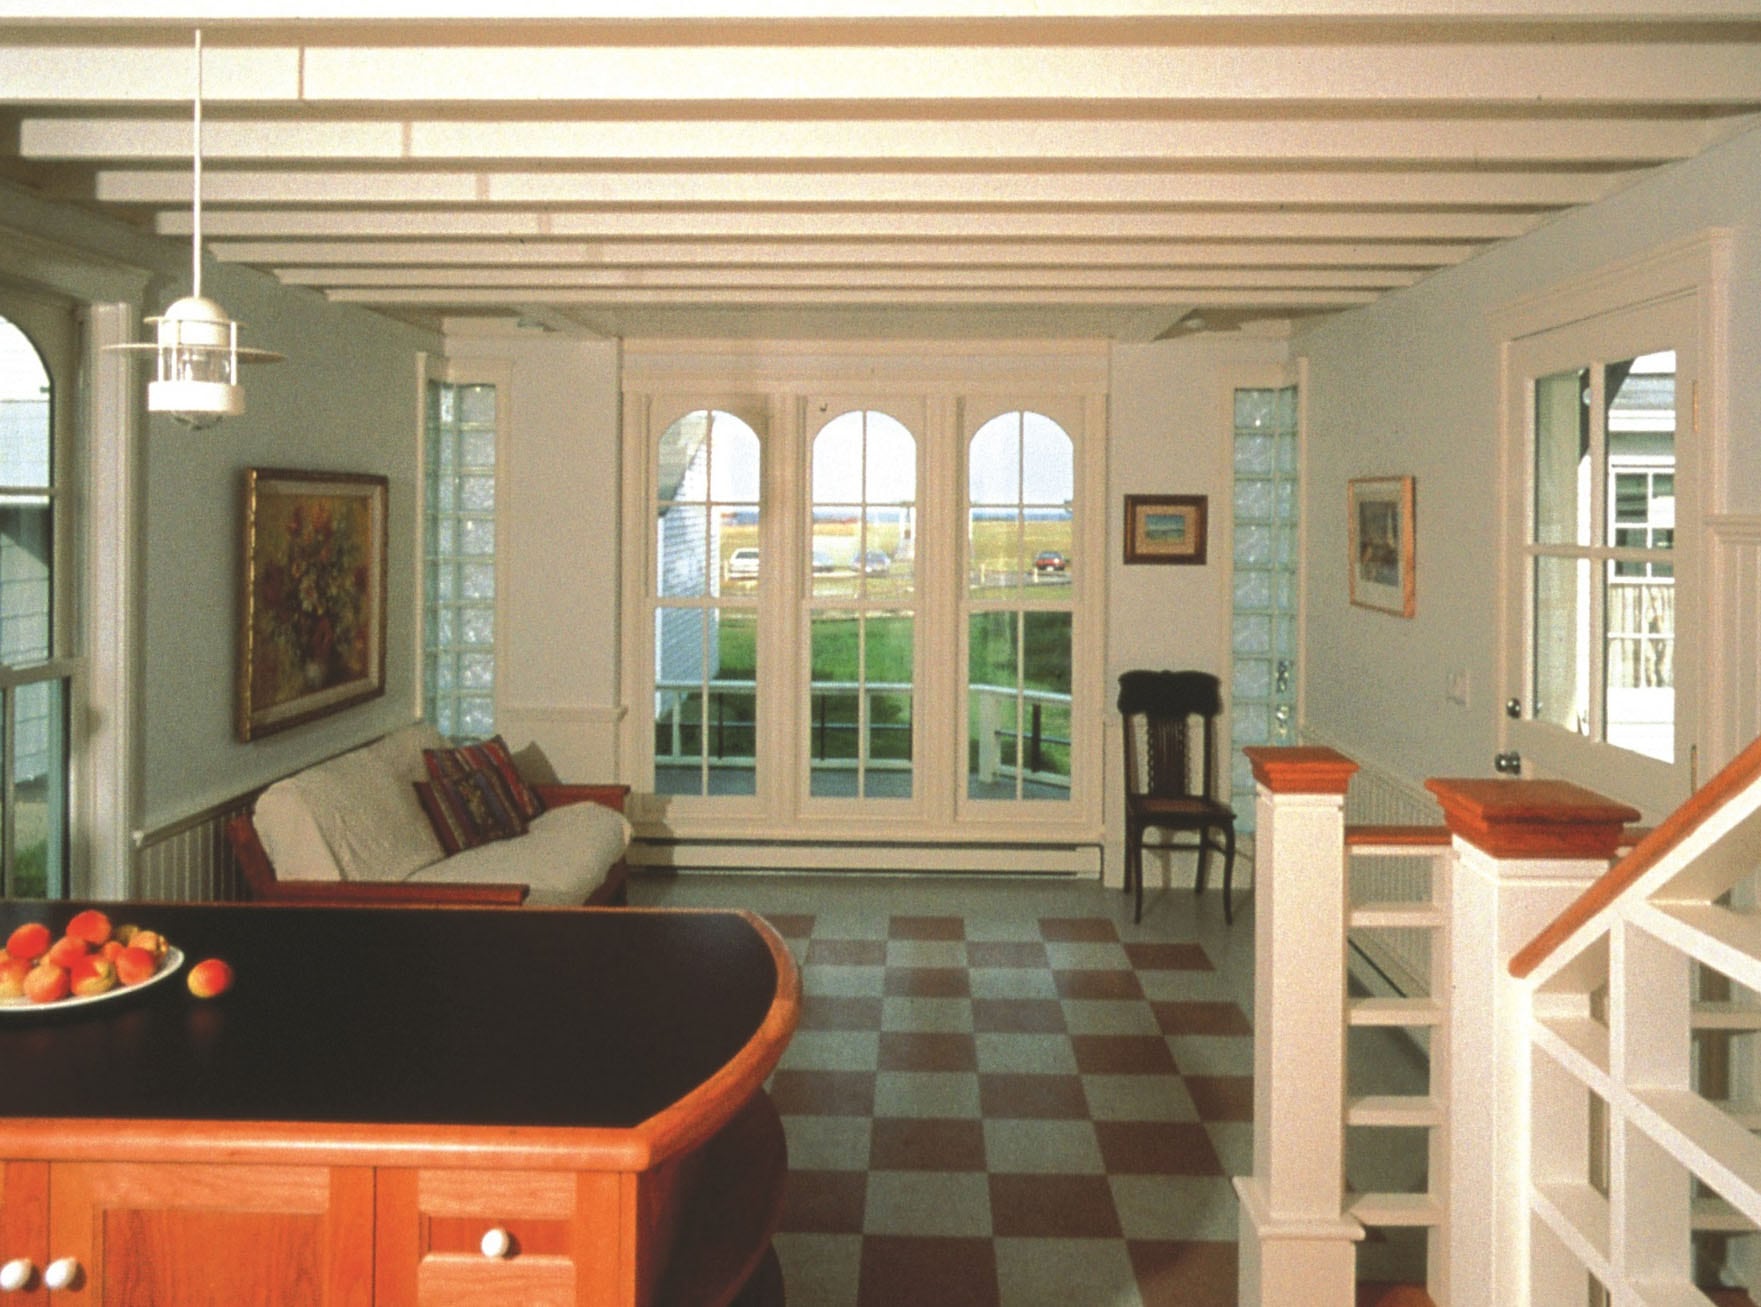 Martha’s Vineyard Cottage - Residential Architecture